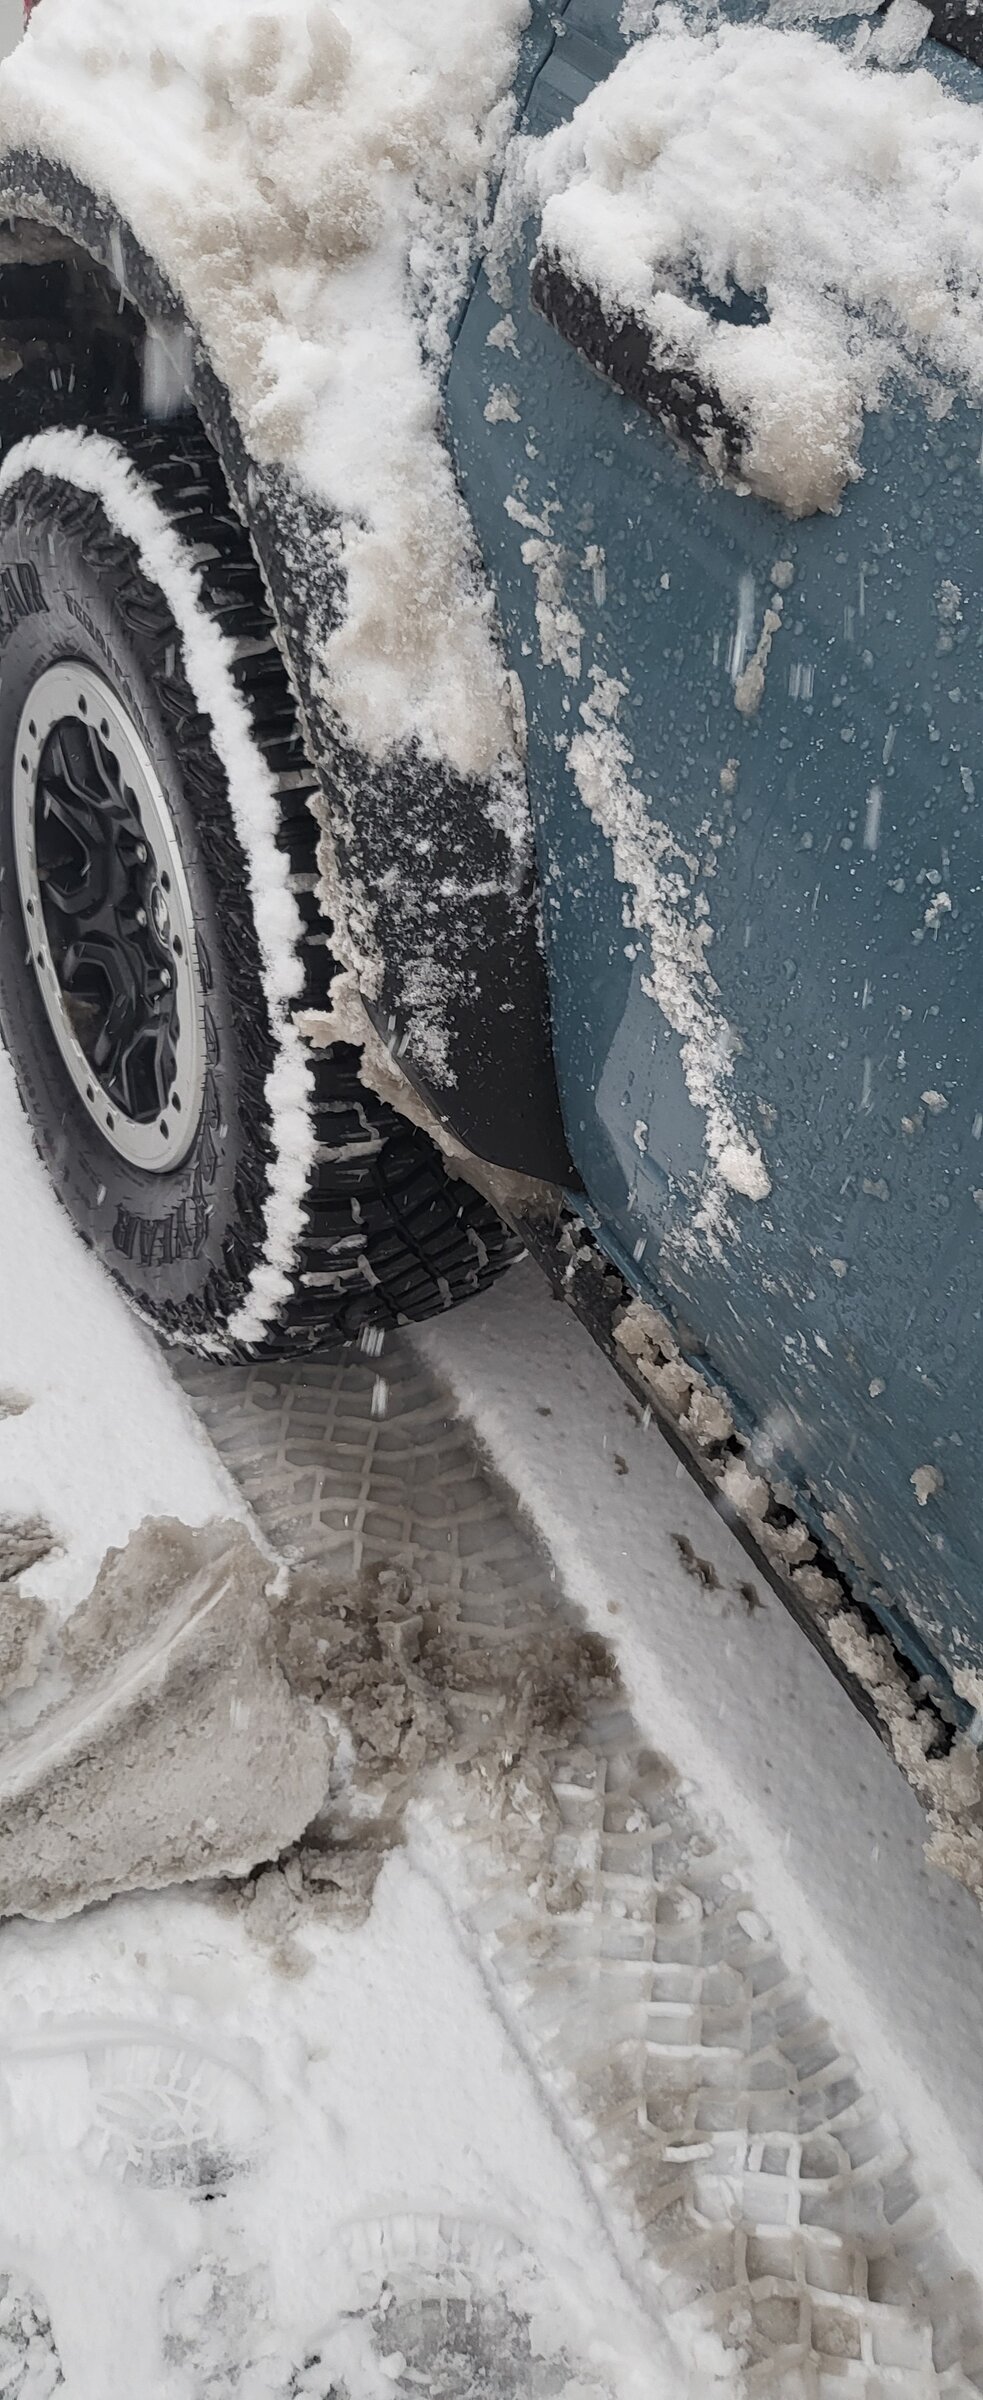 Ford Bronco Snow Pictures Please trim.68128D55-6220-4BCB-B71A-AE6A81BAD5D9.MOV